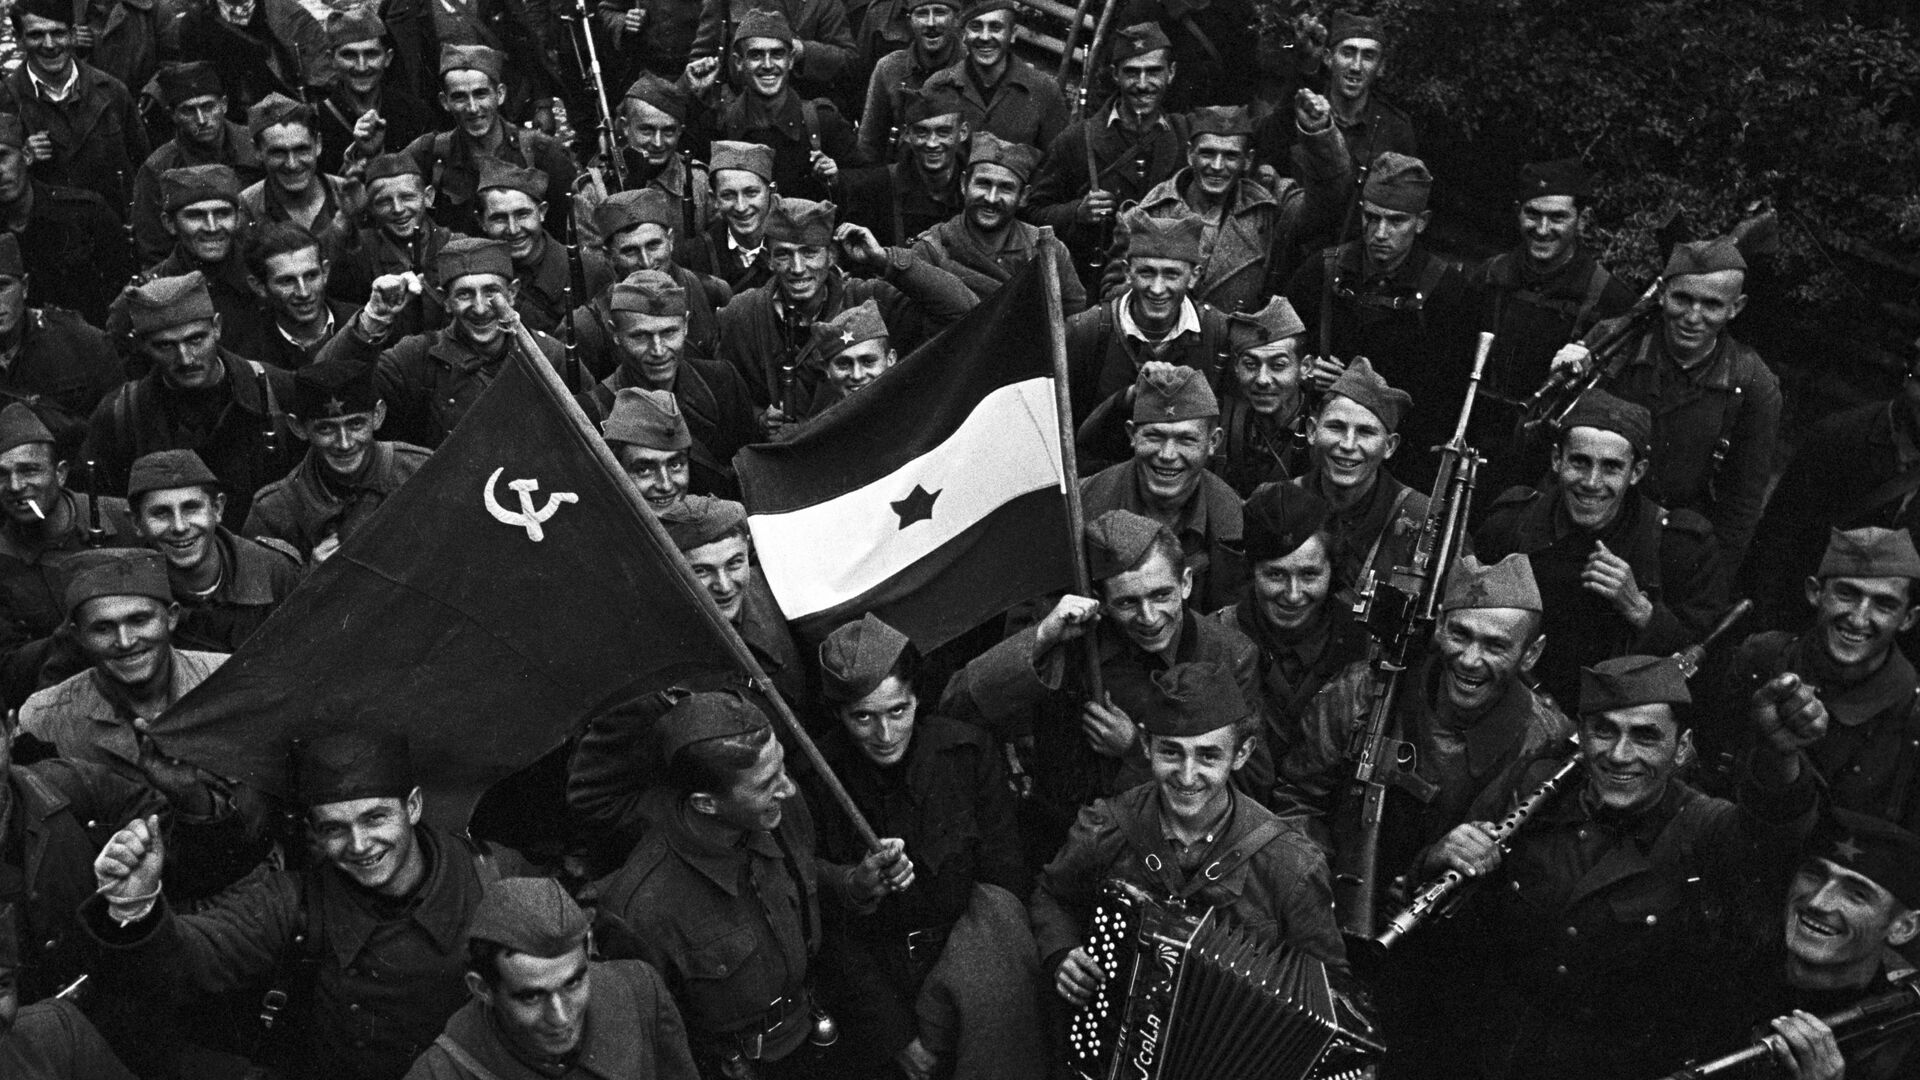 Велики отаџбински рат 1941-1945. Ослобођење Београда, октобар 1944. - Sputnik Србија, 1920, 10.11.2021